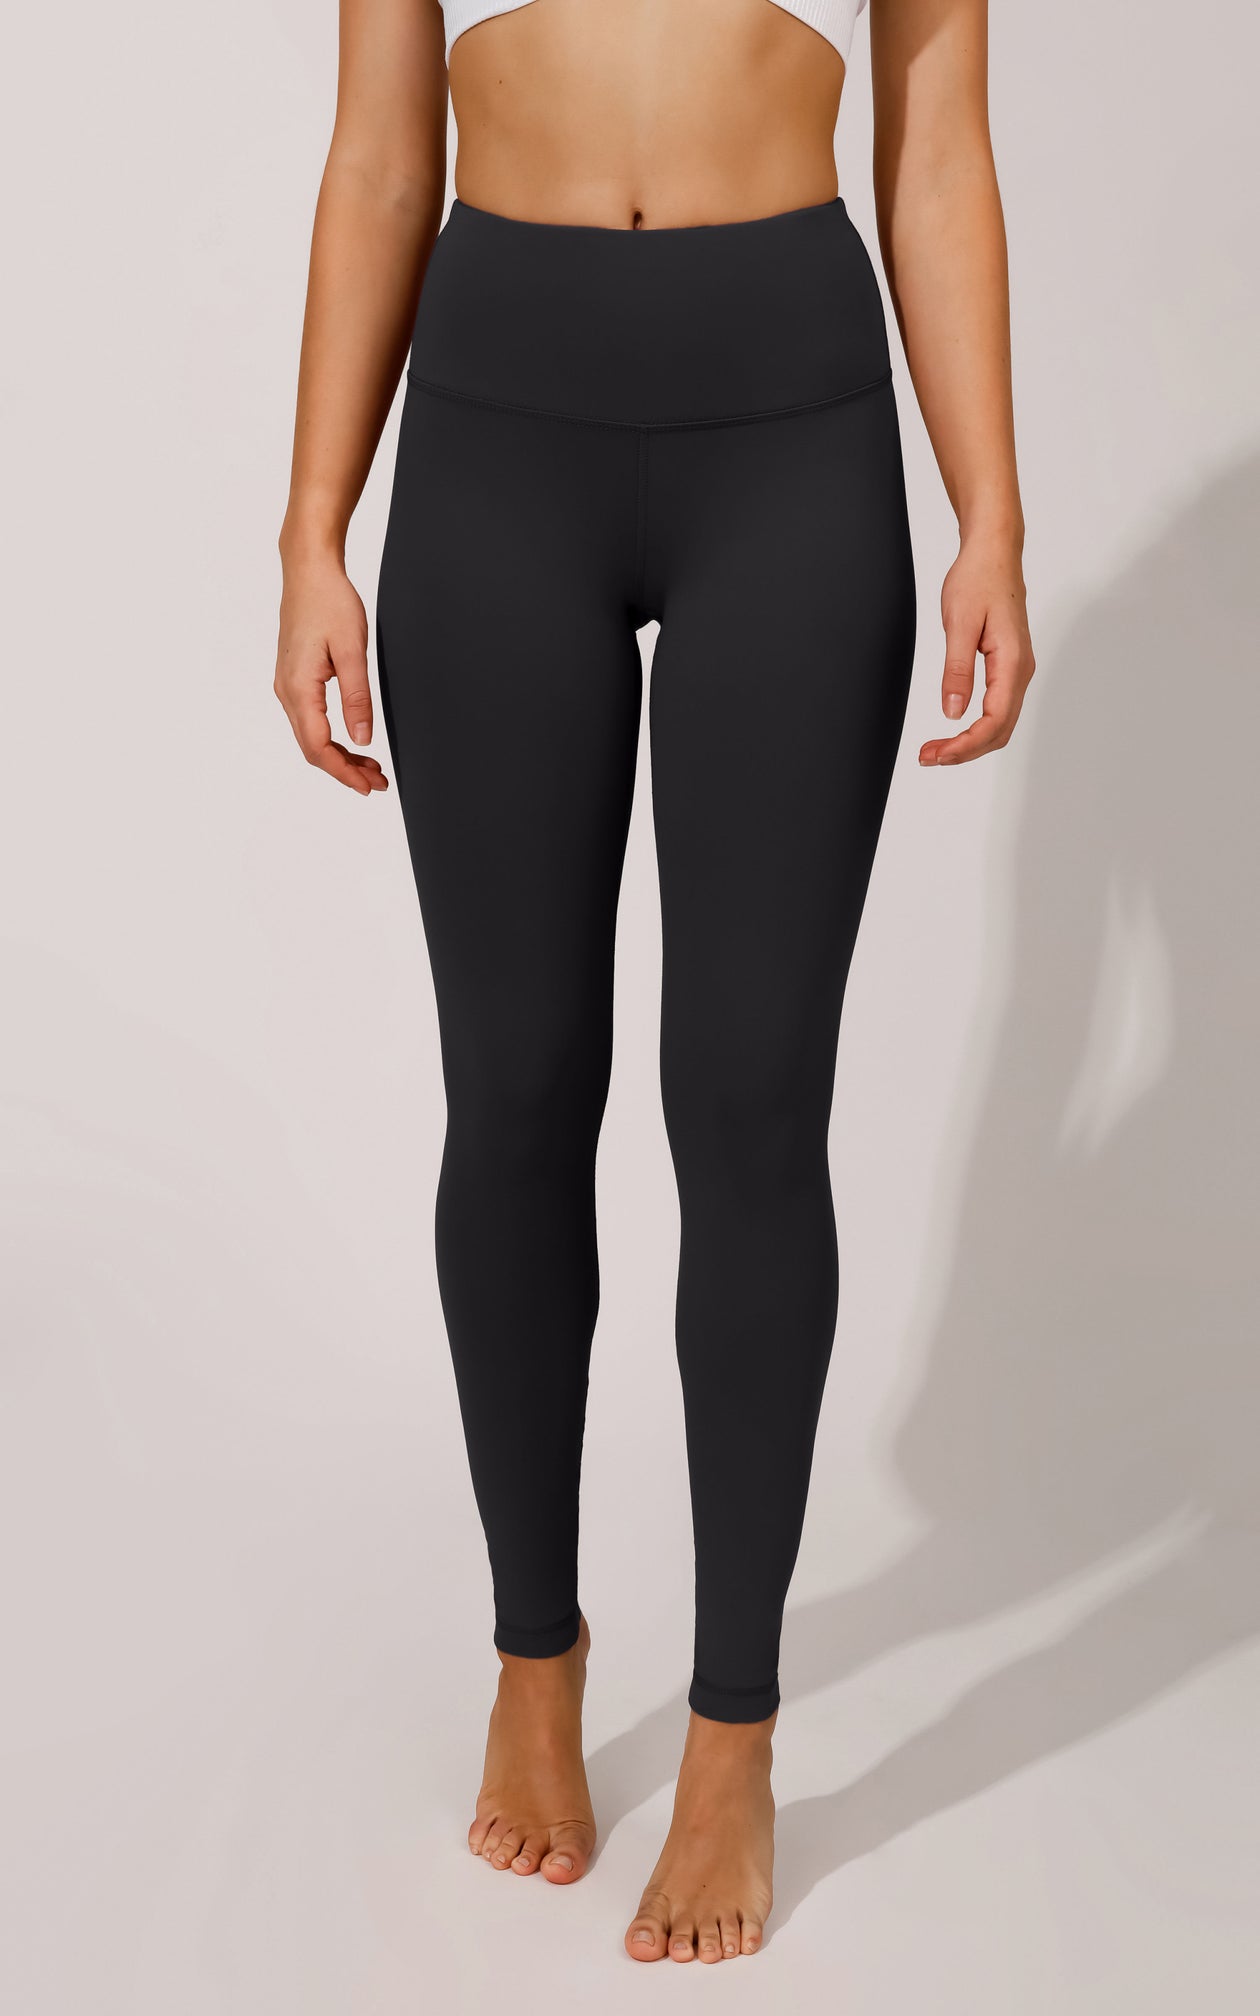 Velocity High Waist Squat Proof Ankle Length Yoga Pants for Women